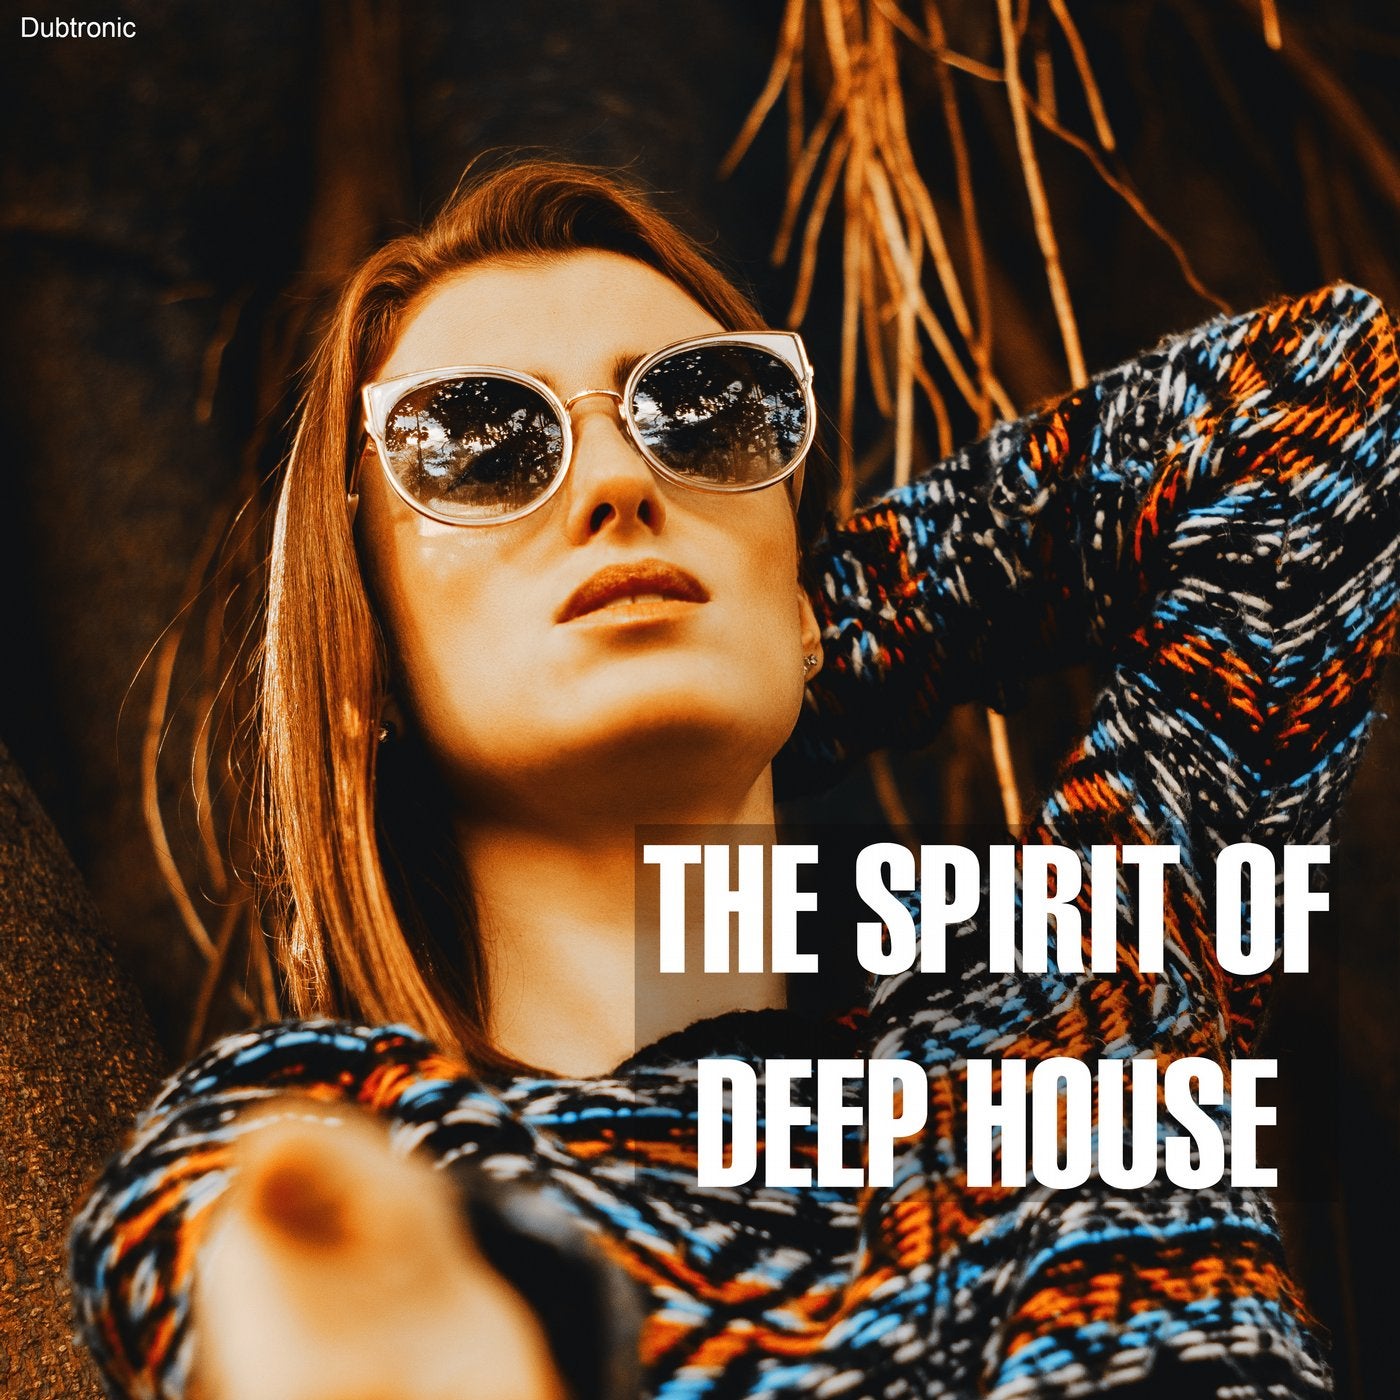 The Spirit of Deep House